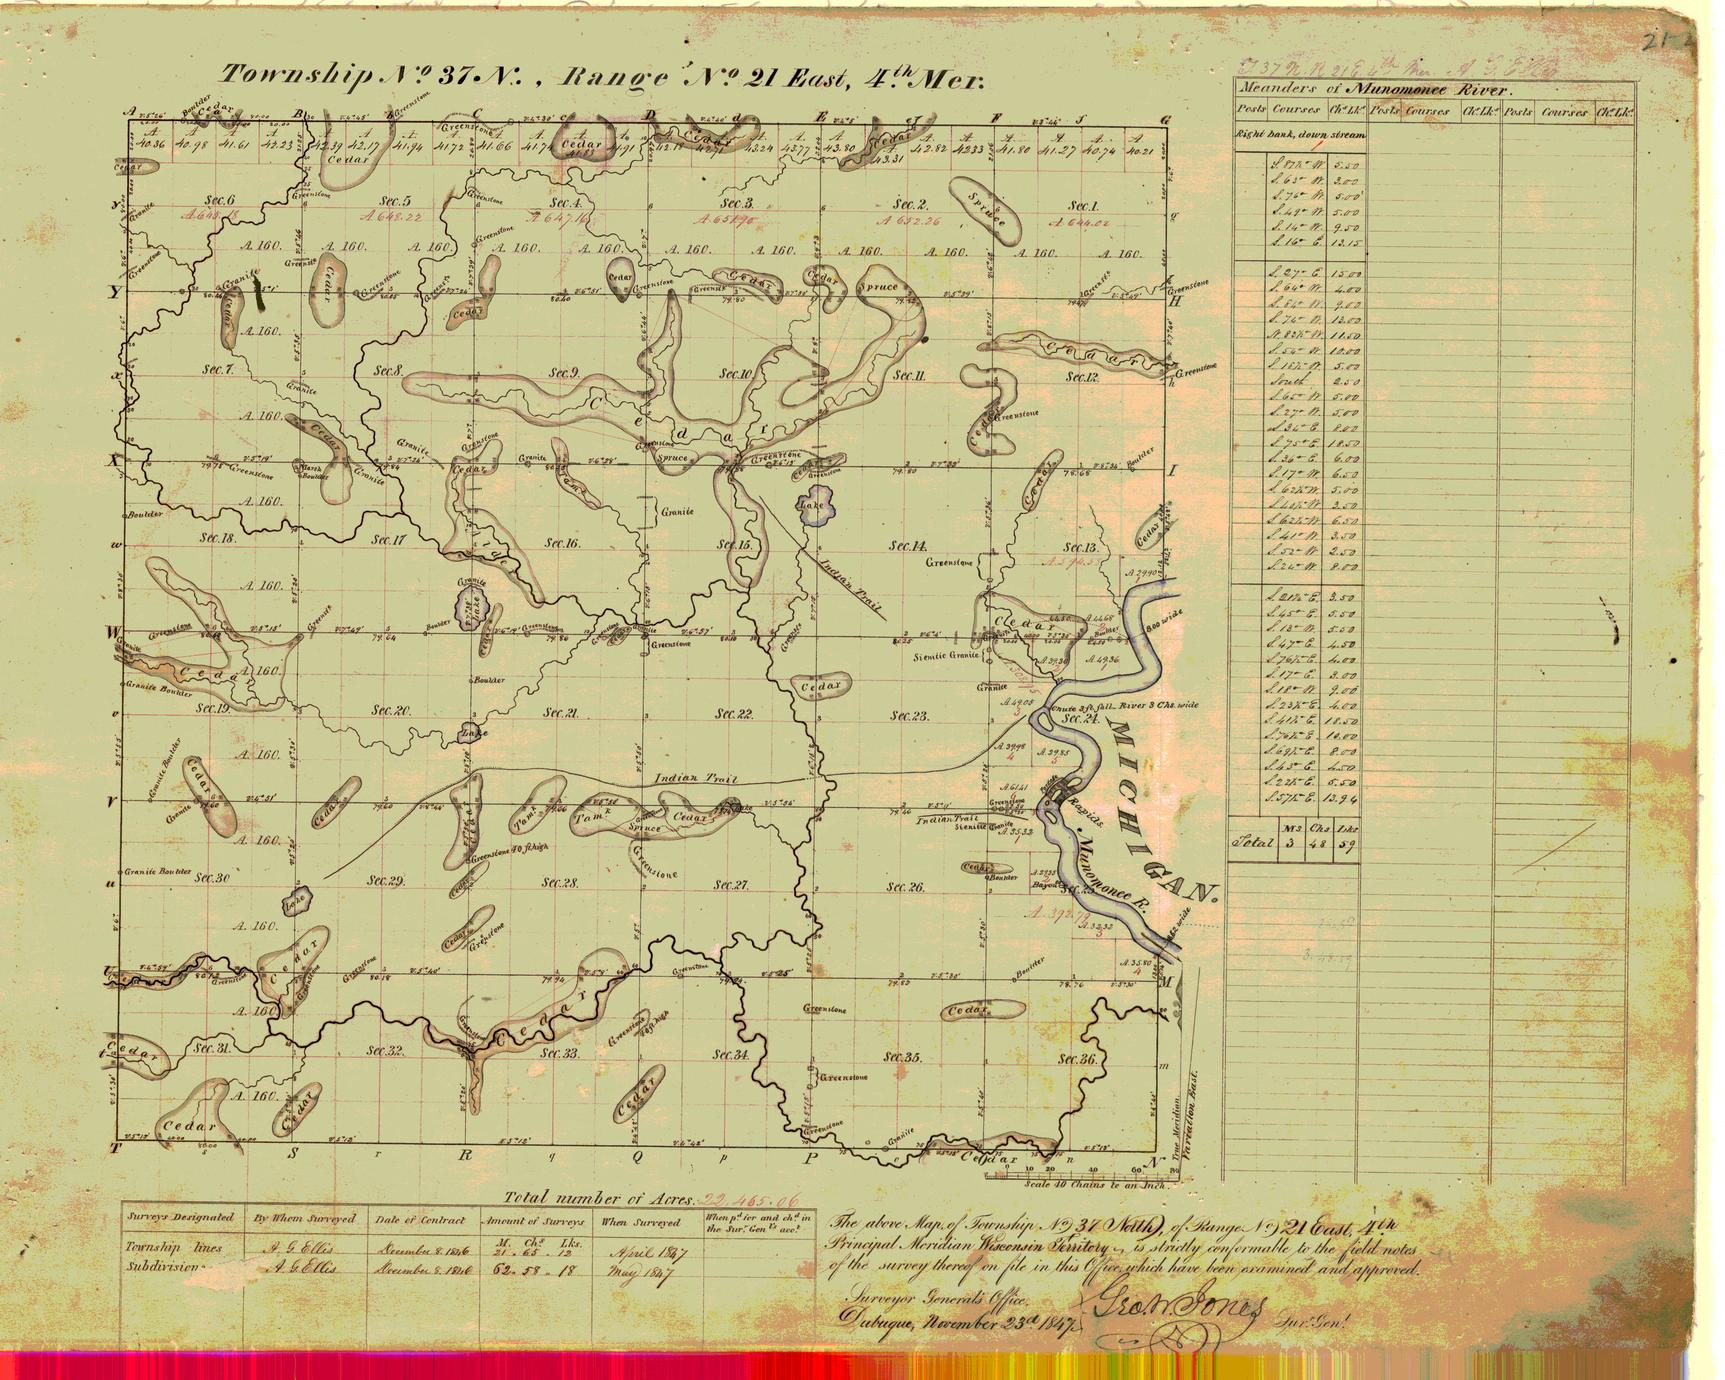 [Public Land Survey System map: Wisconsin Township 37 North, Range 21 East]